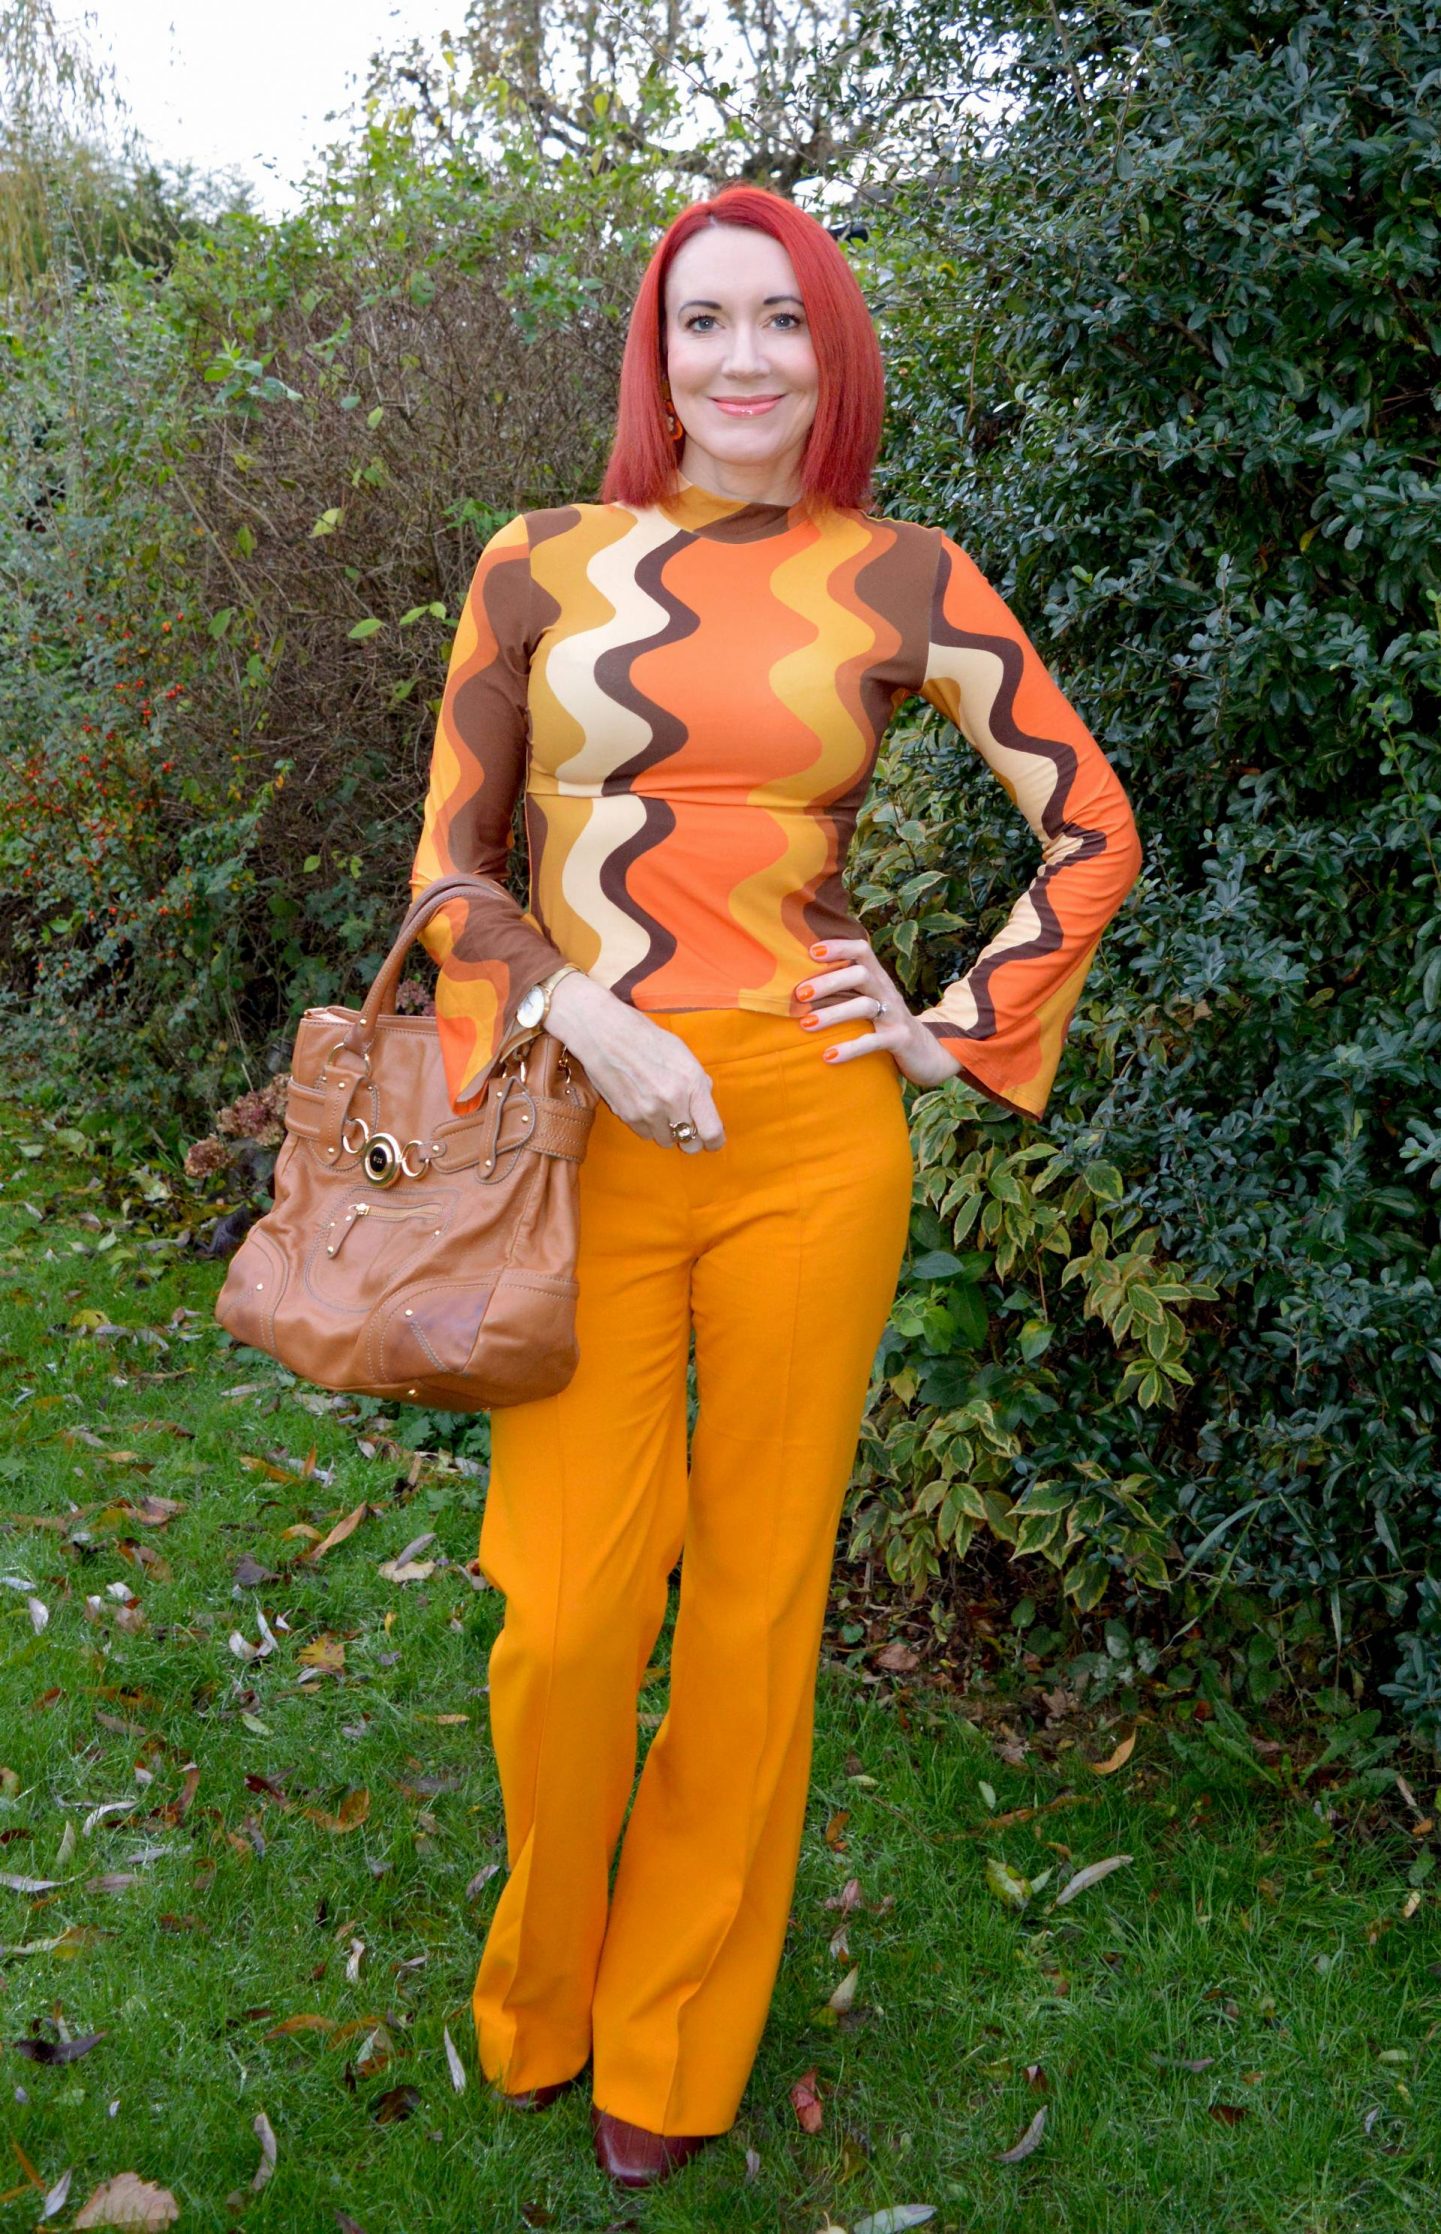 Zara marigold orange suit, The Chain Designs Sharon top in Boogie Stripes, Ri2K brown bag